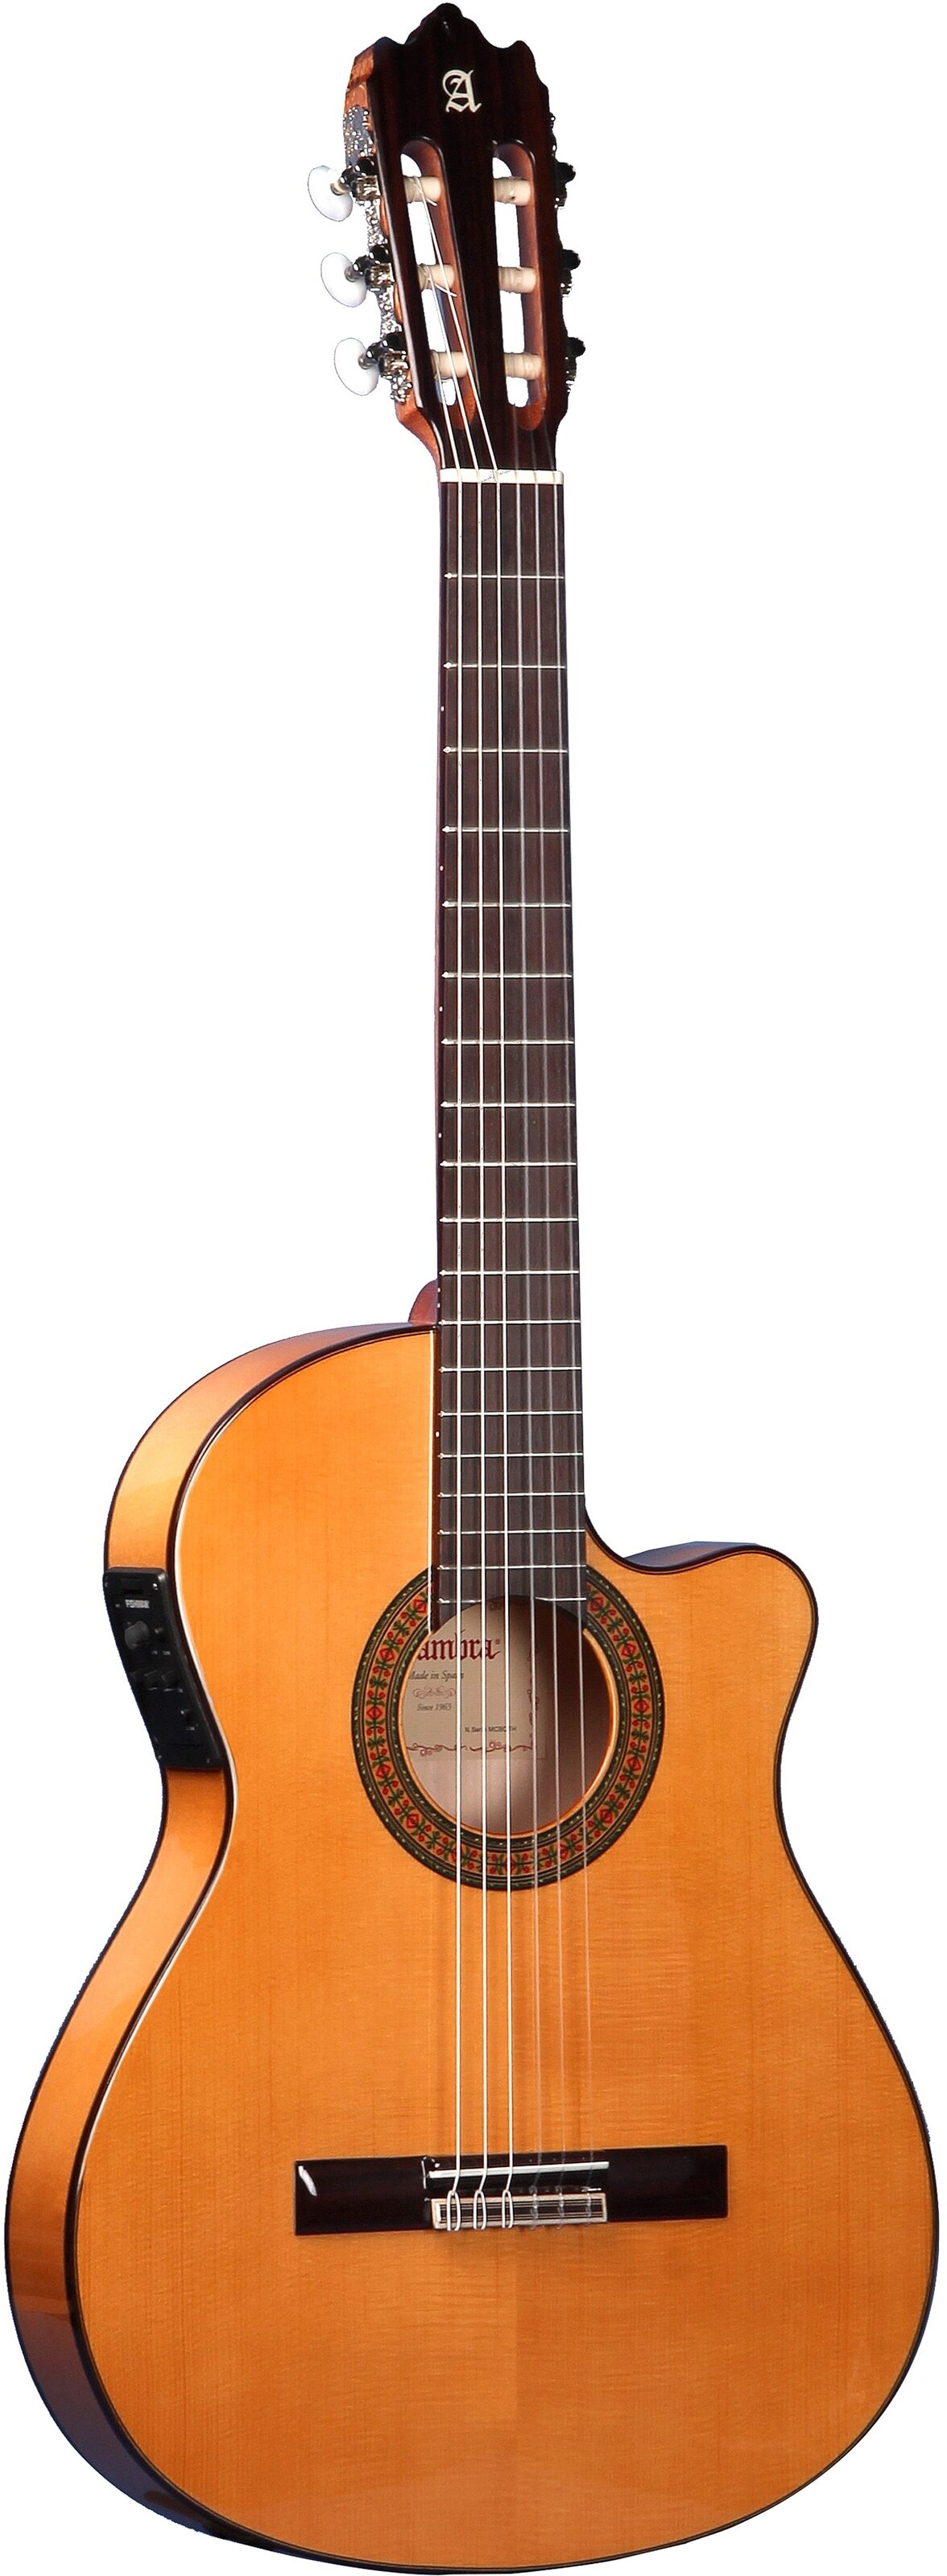 ALHAMBRA 3F - Guitare classique